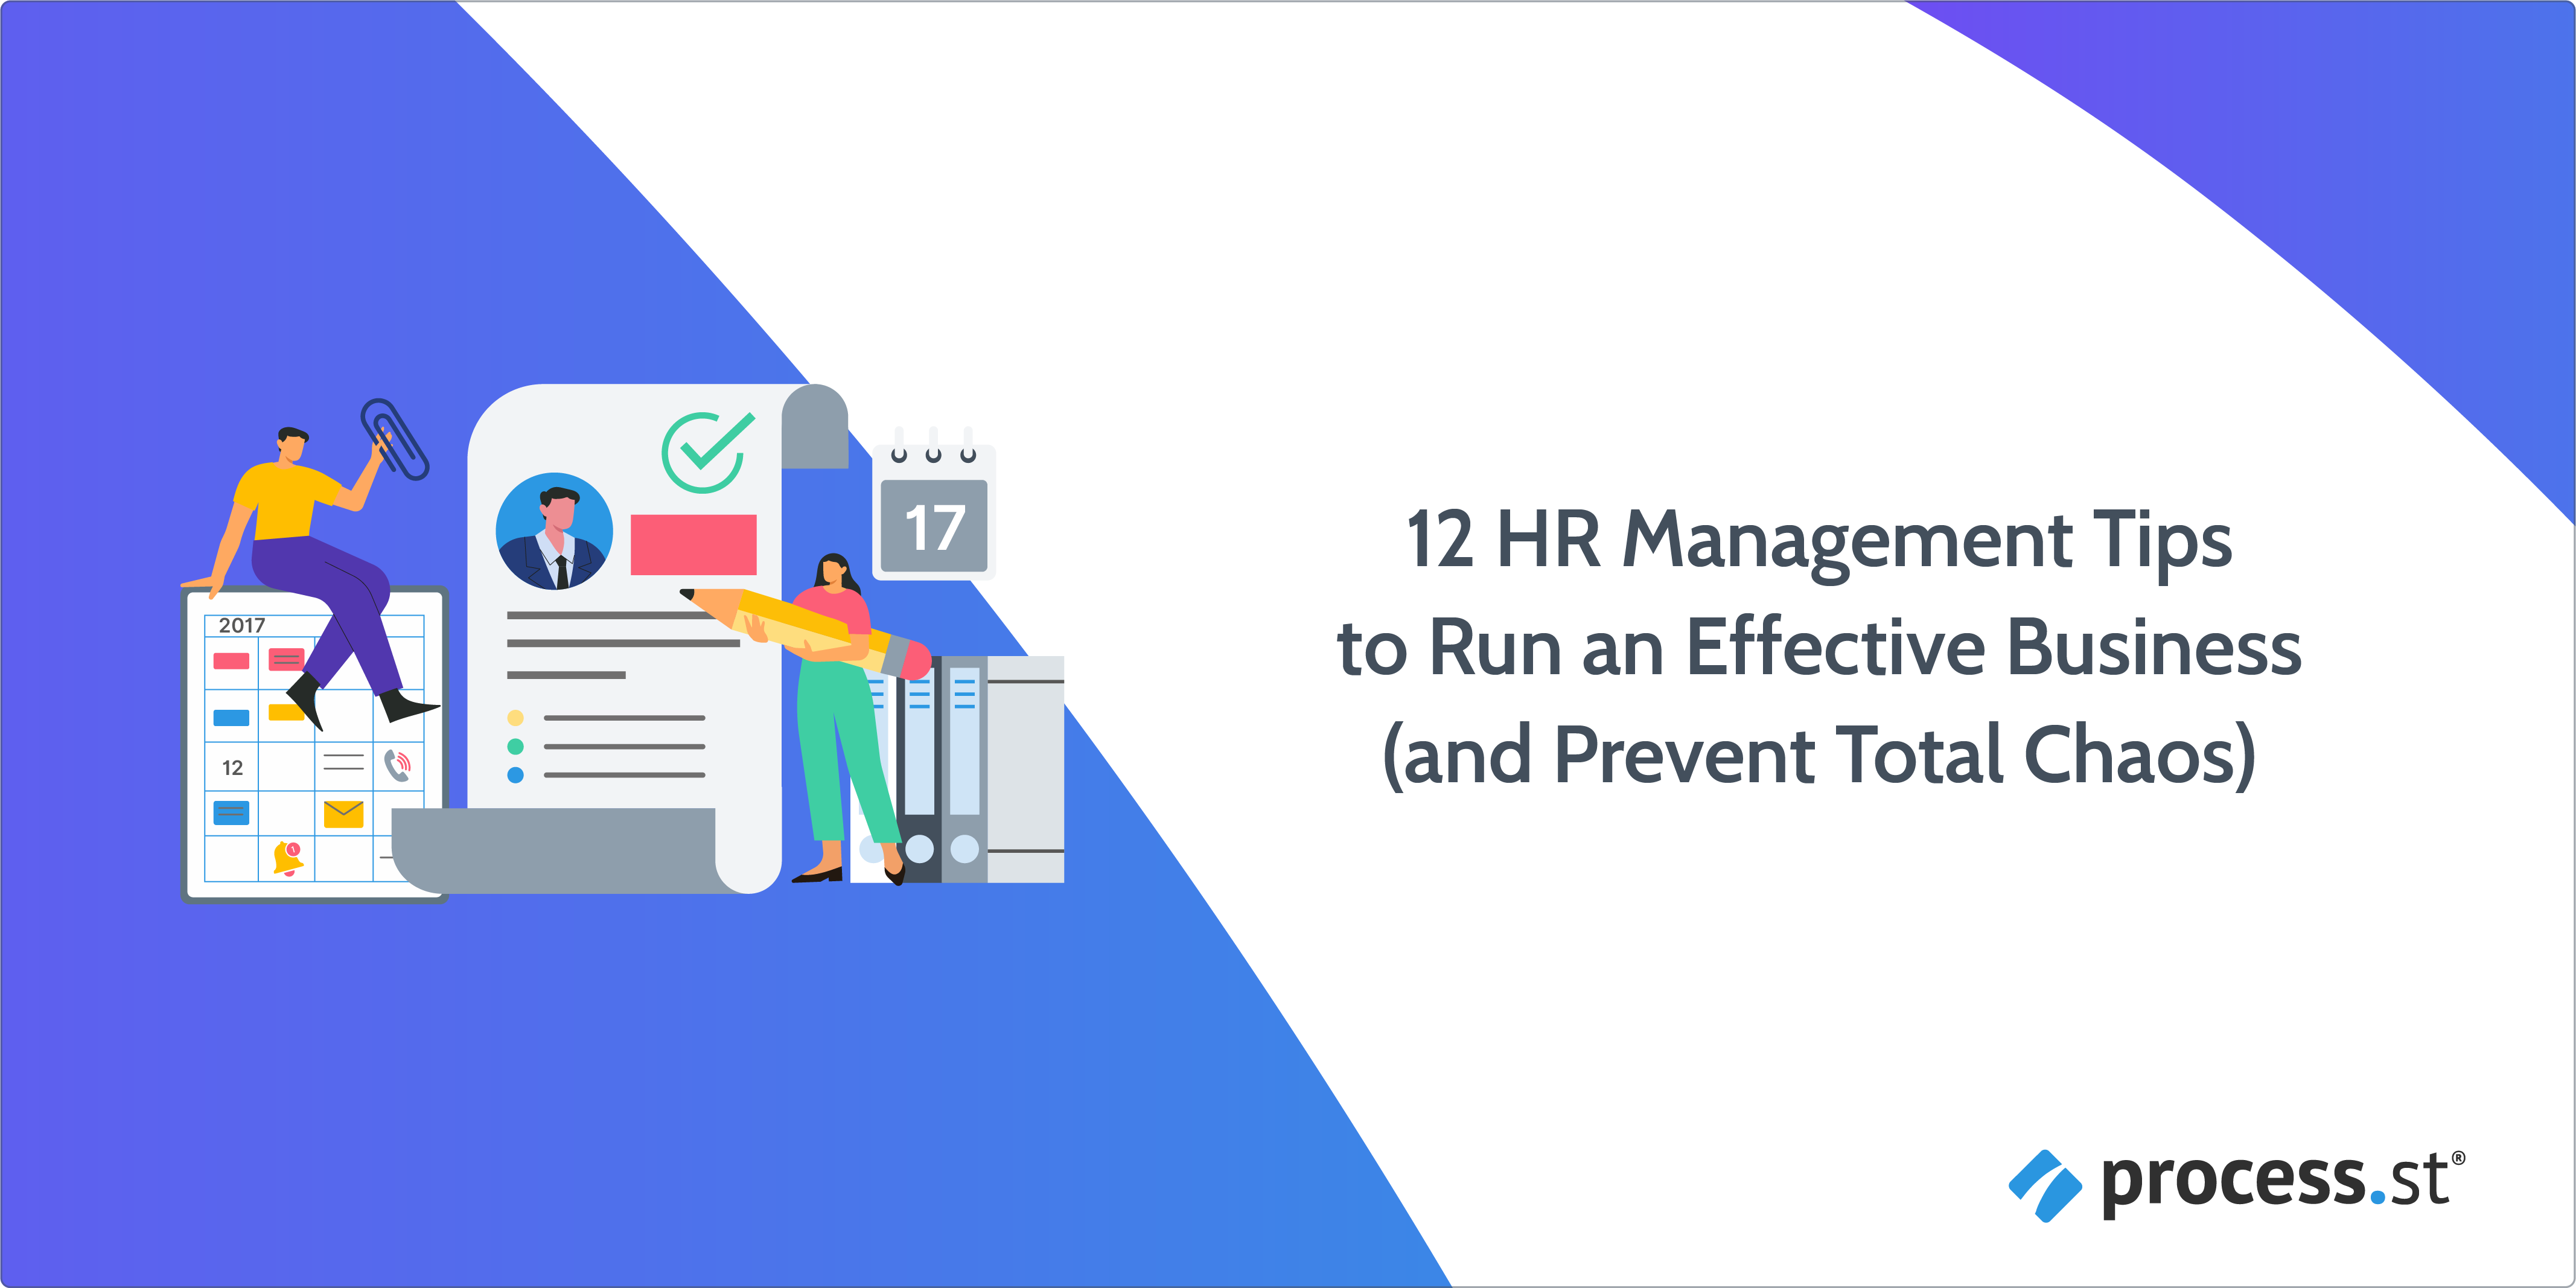 12 Useful HR Management Tips to Run an Effective Business